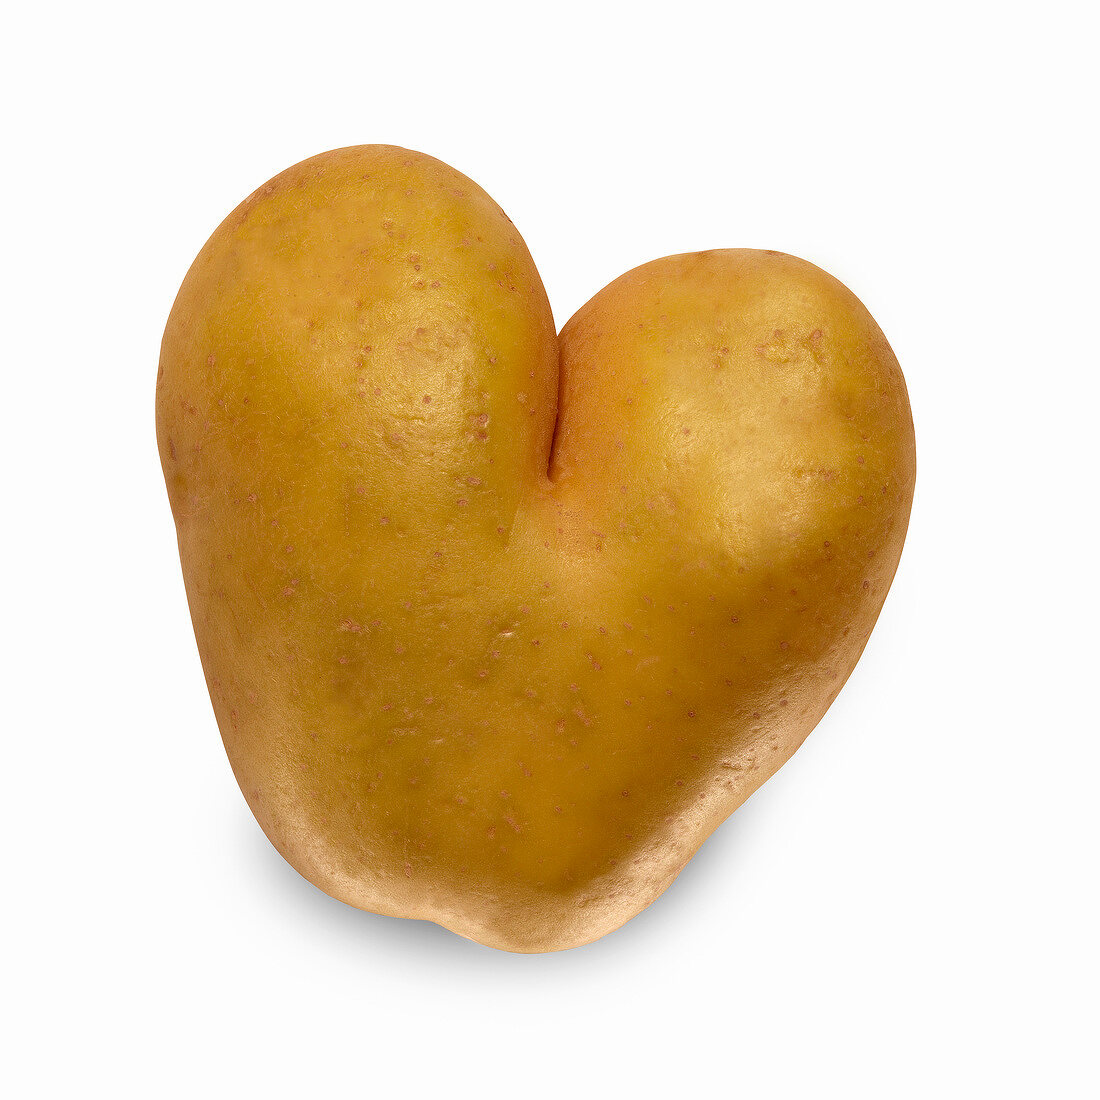 Heart-shaped potato